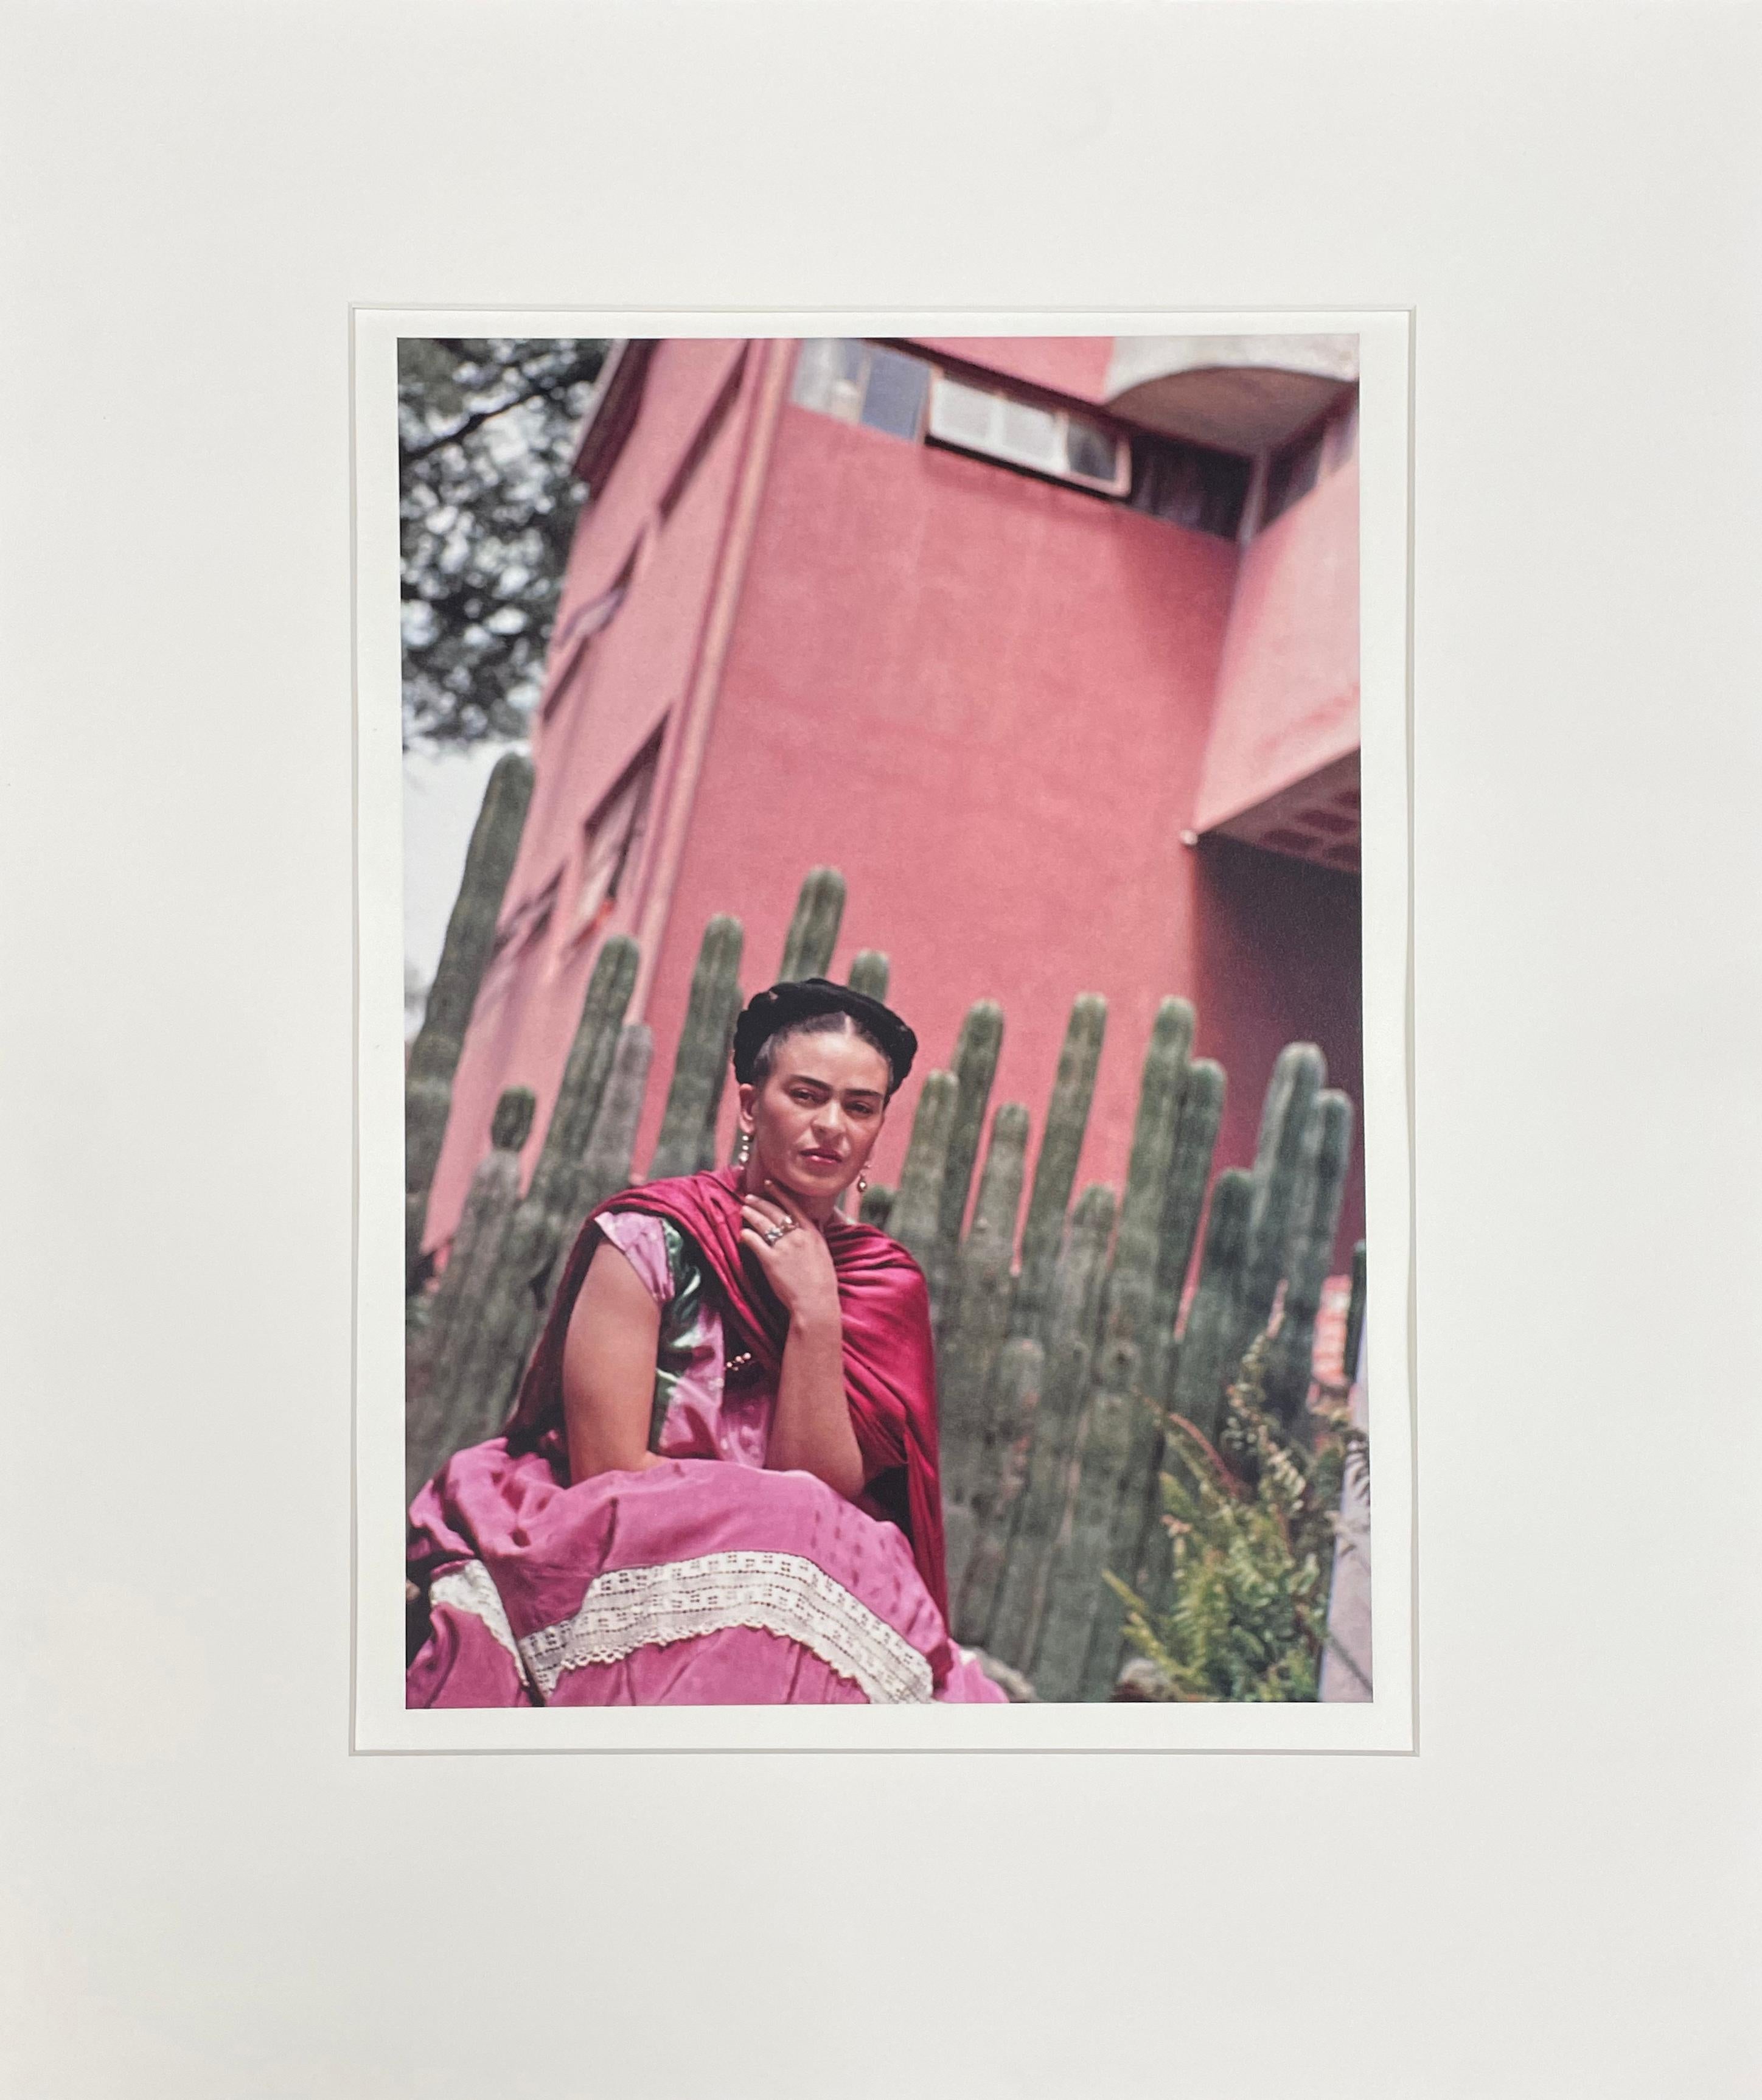 Frida by Organ Cactus Fence - Photograph by Nickolas Muray